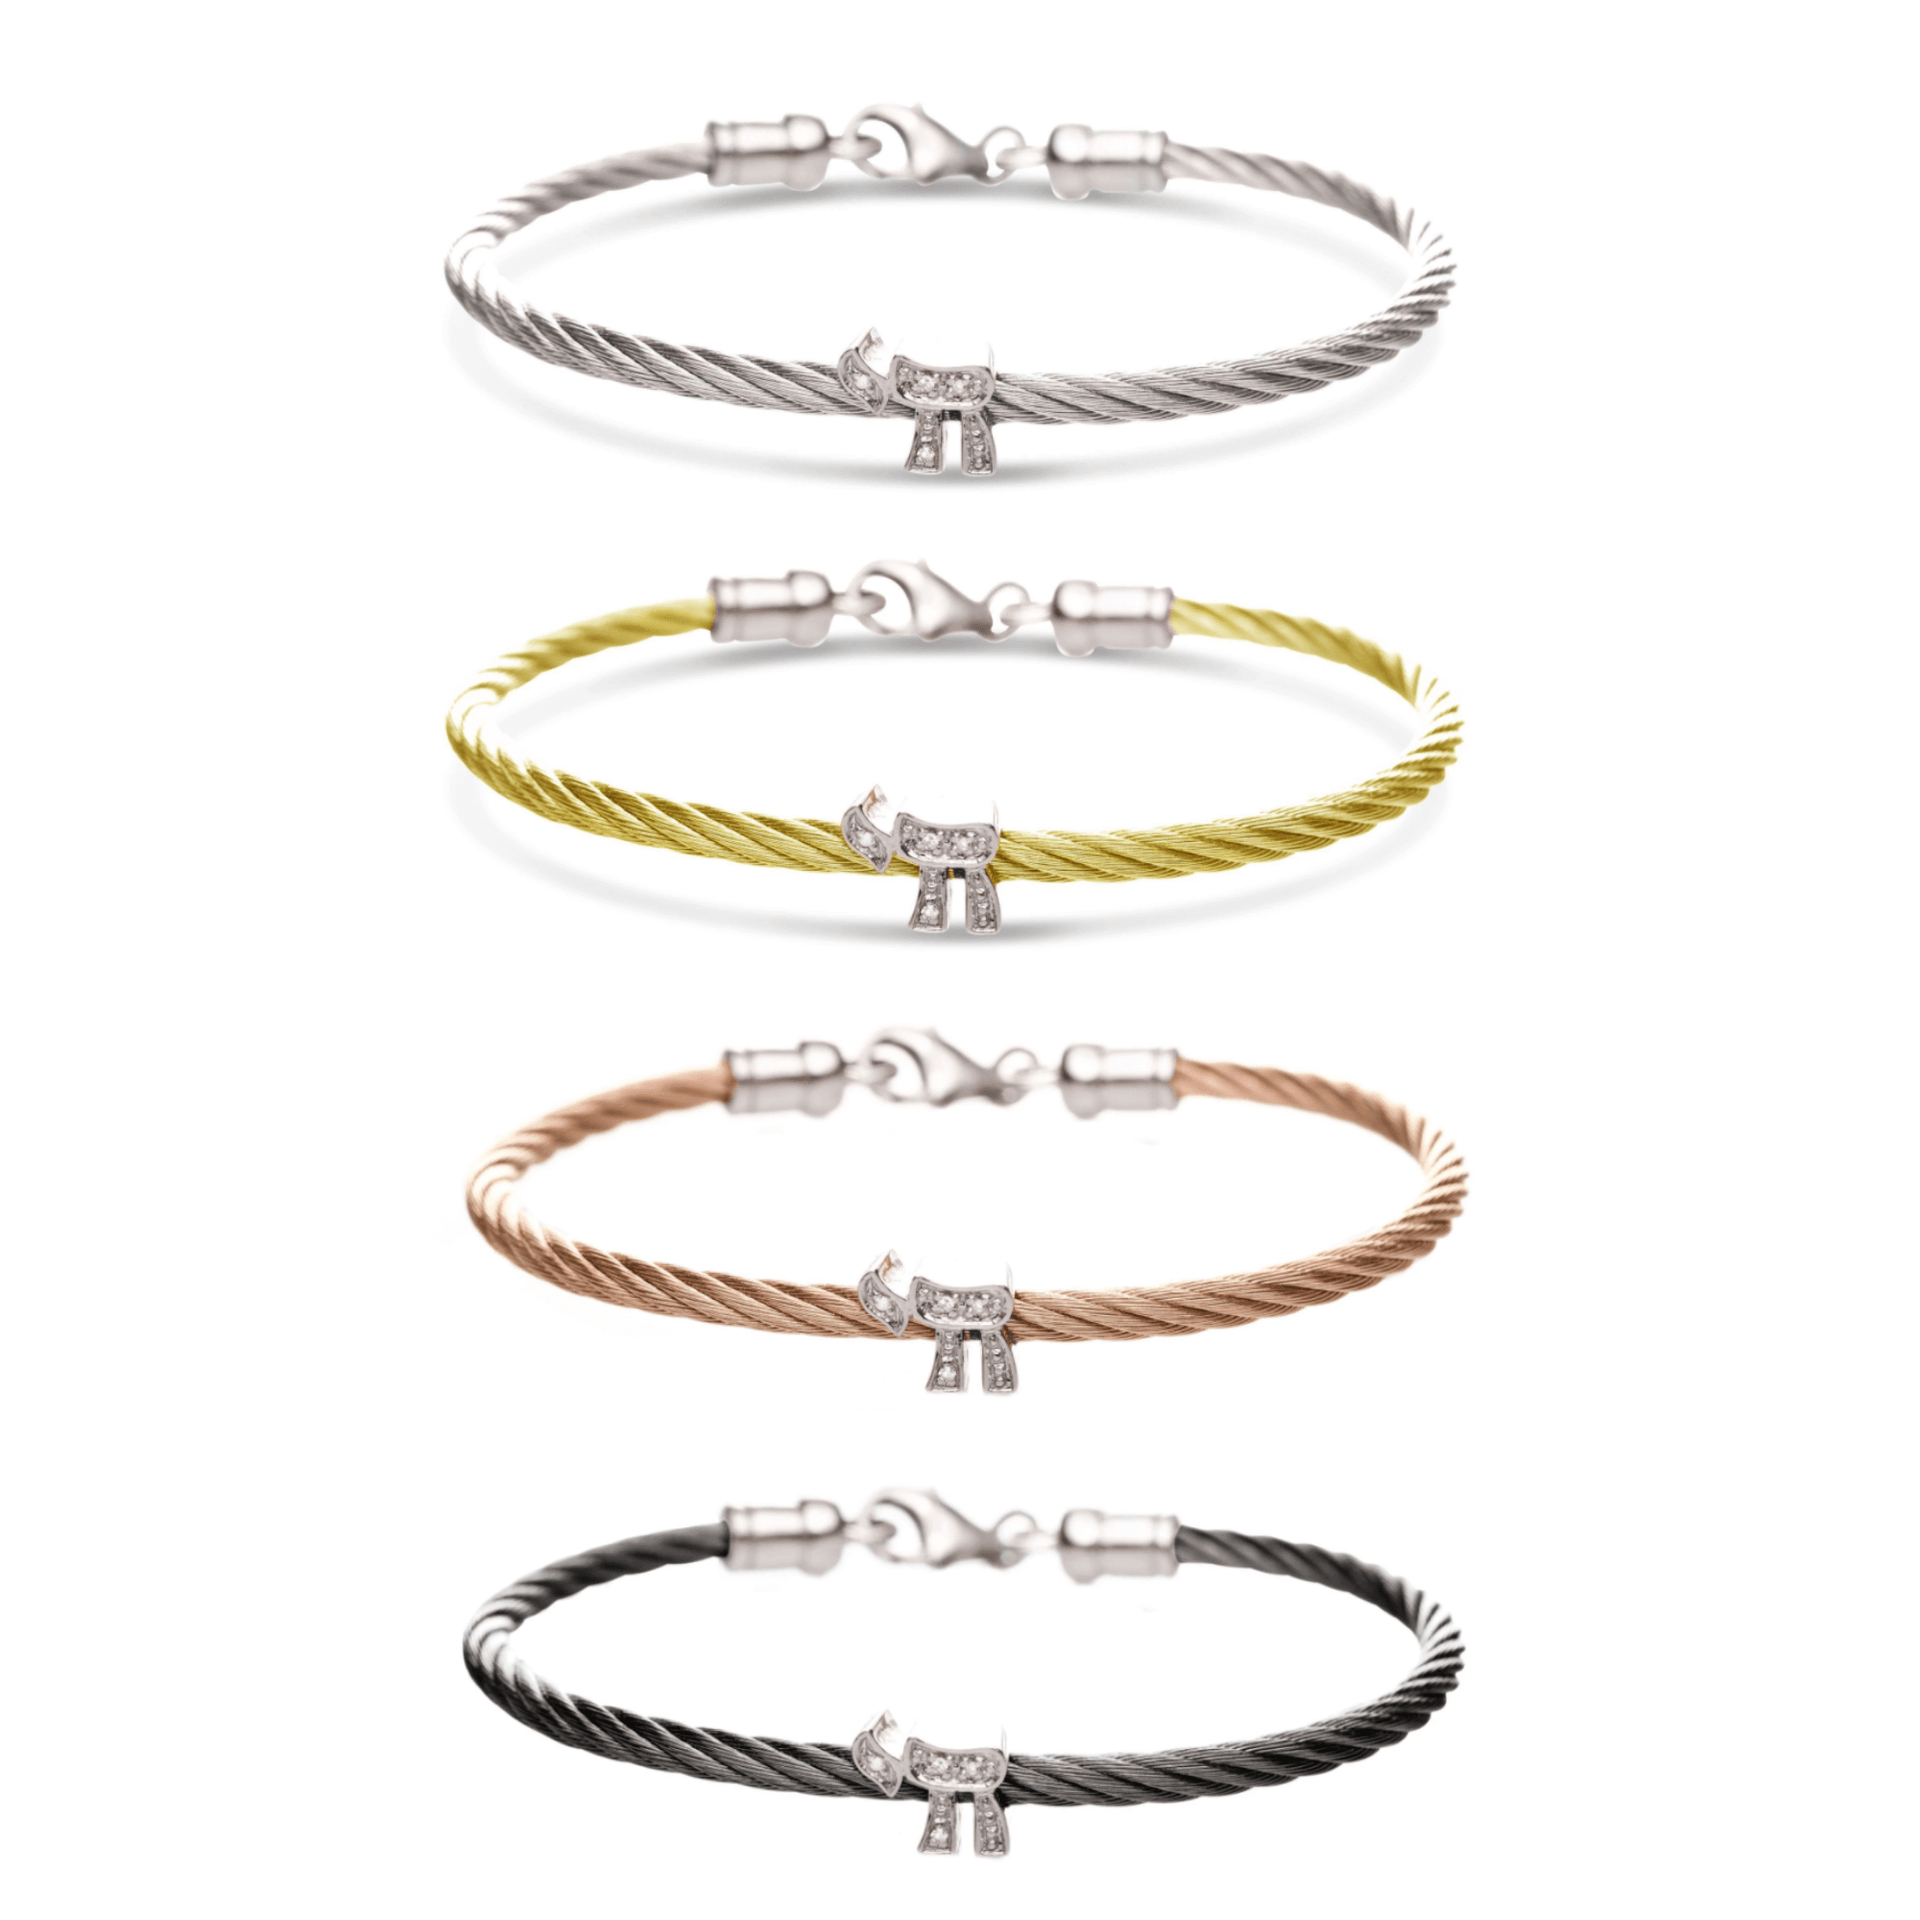 Alef Bet Bracelets Chai Diamond Stacking Cable Bracelets - Rose Gold, Gold, Silver or Black